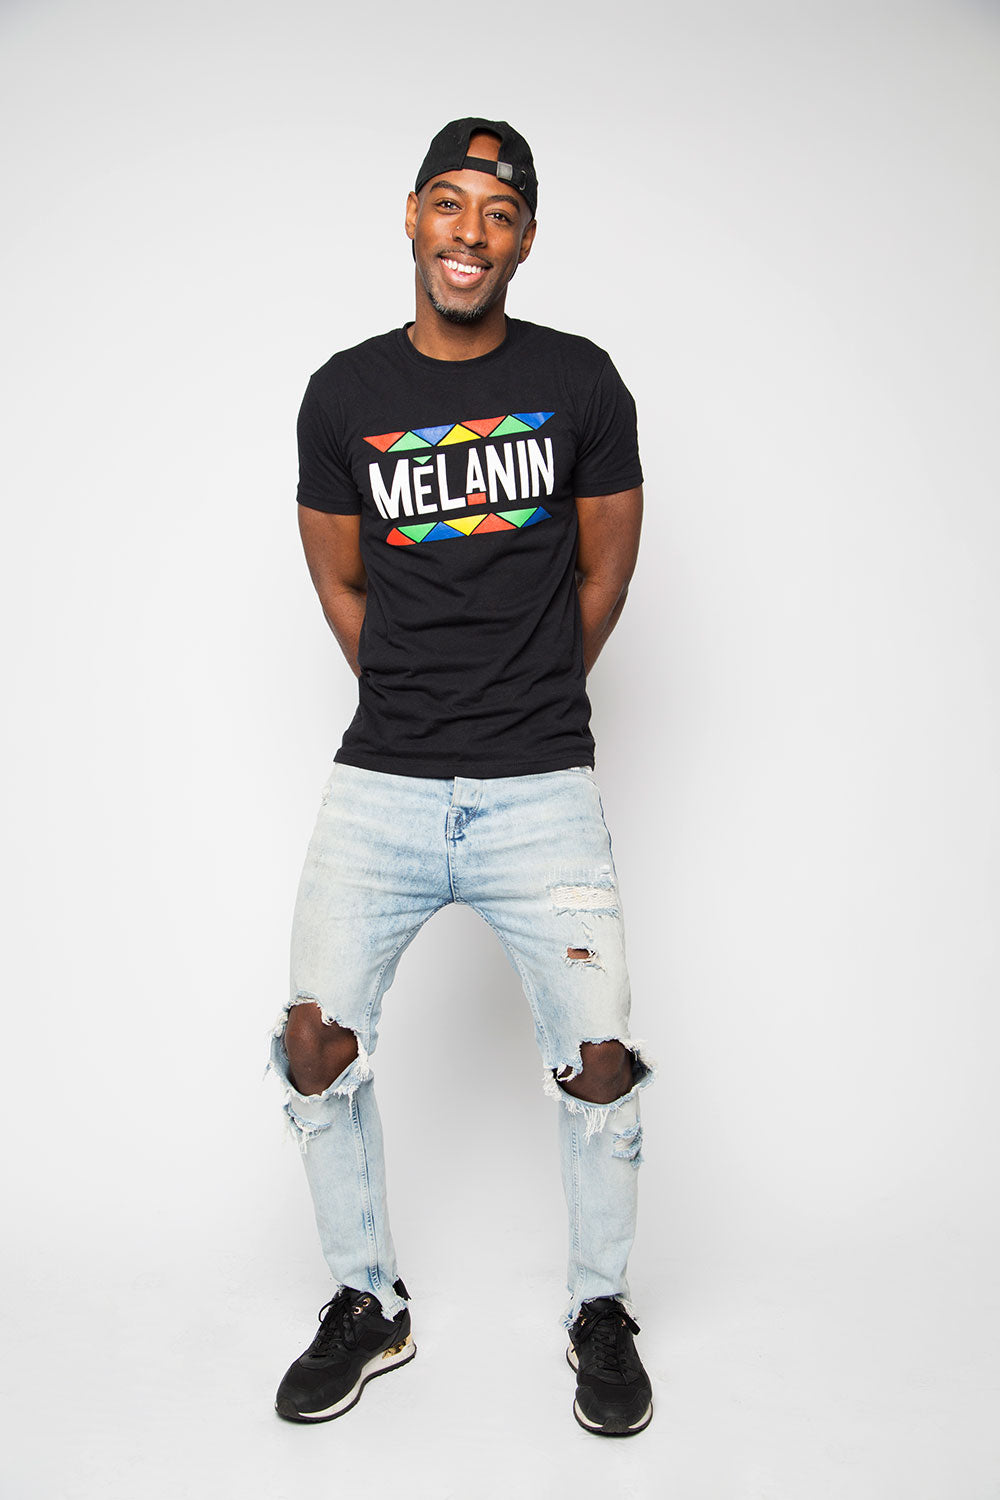 Melanin Shirt in Black - Trunk Series